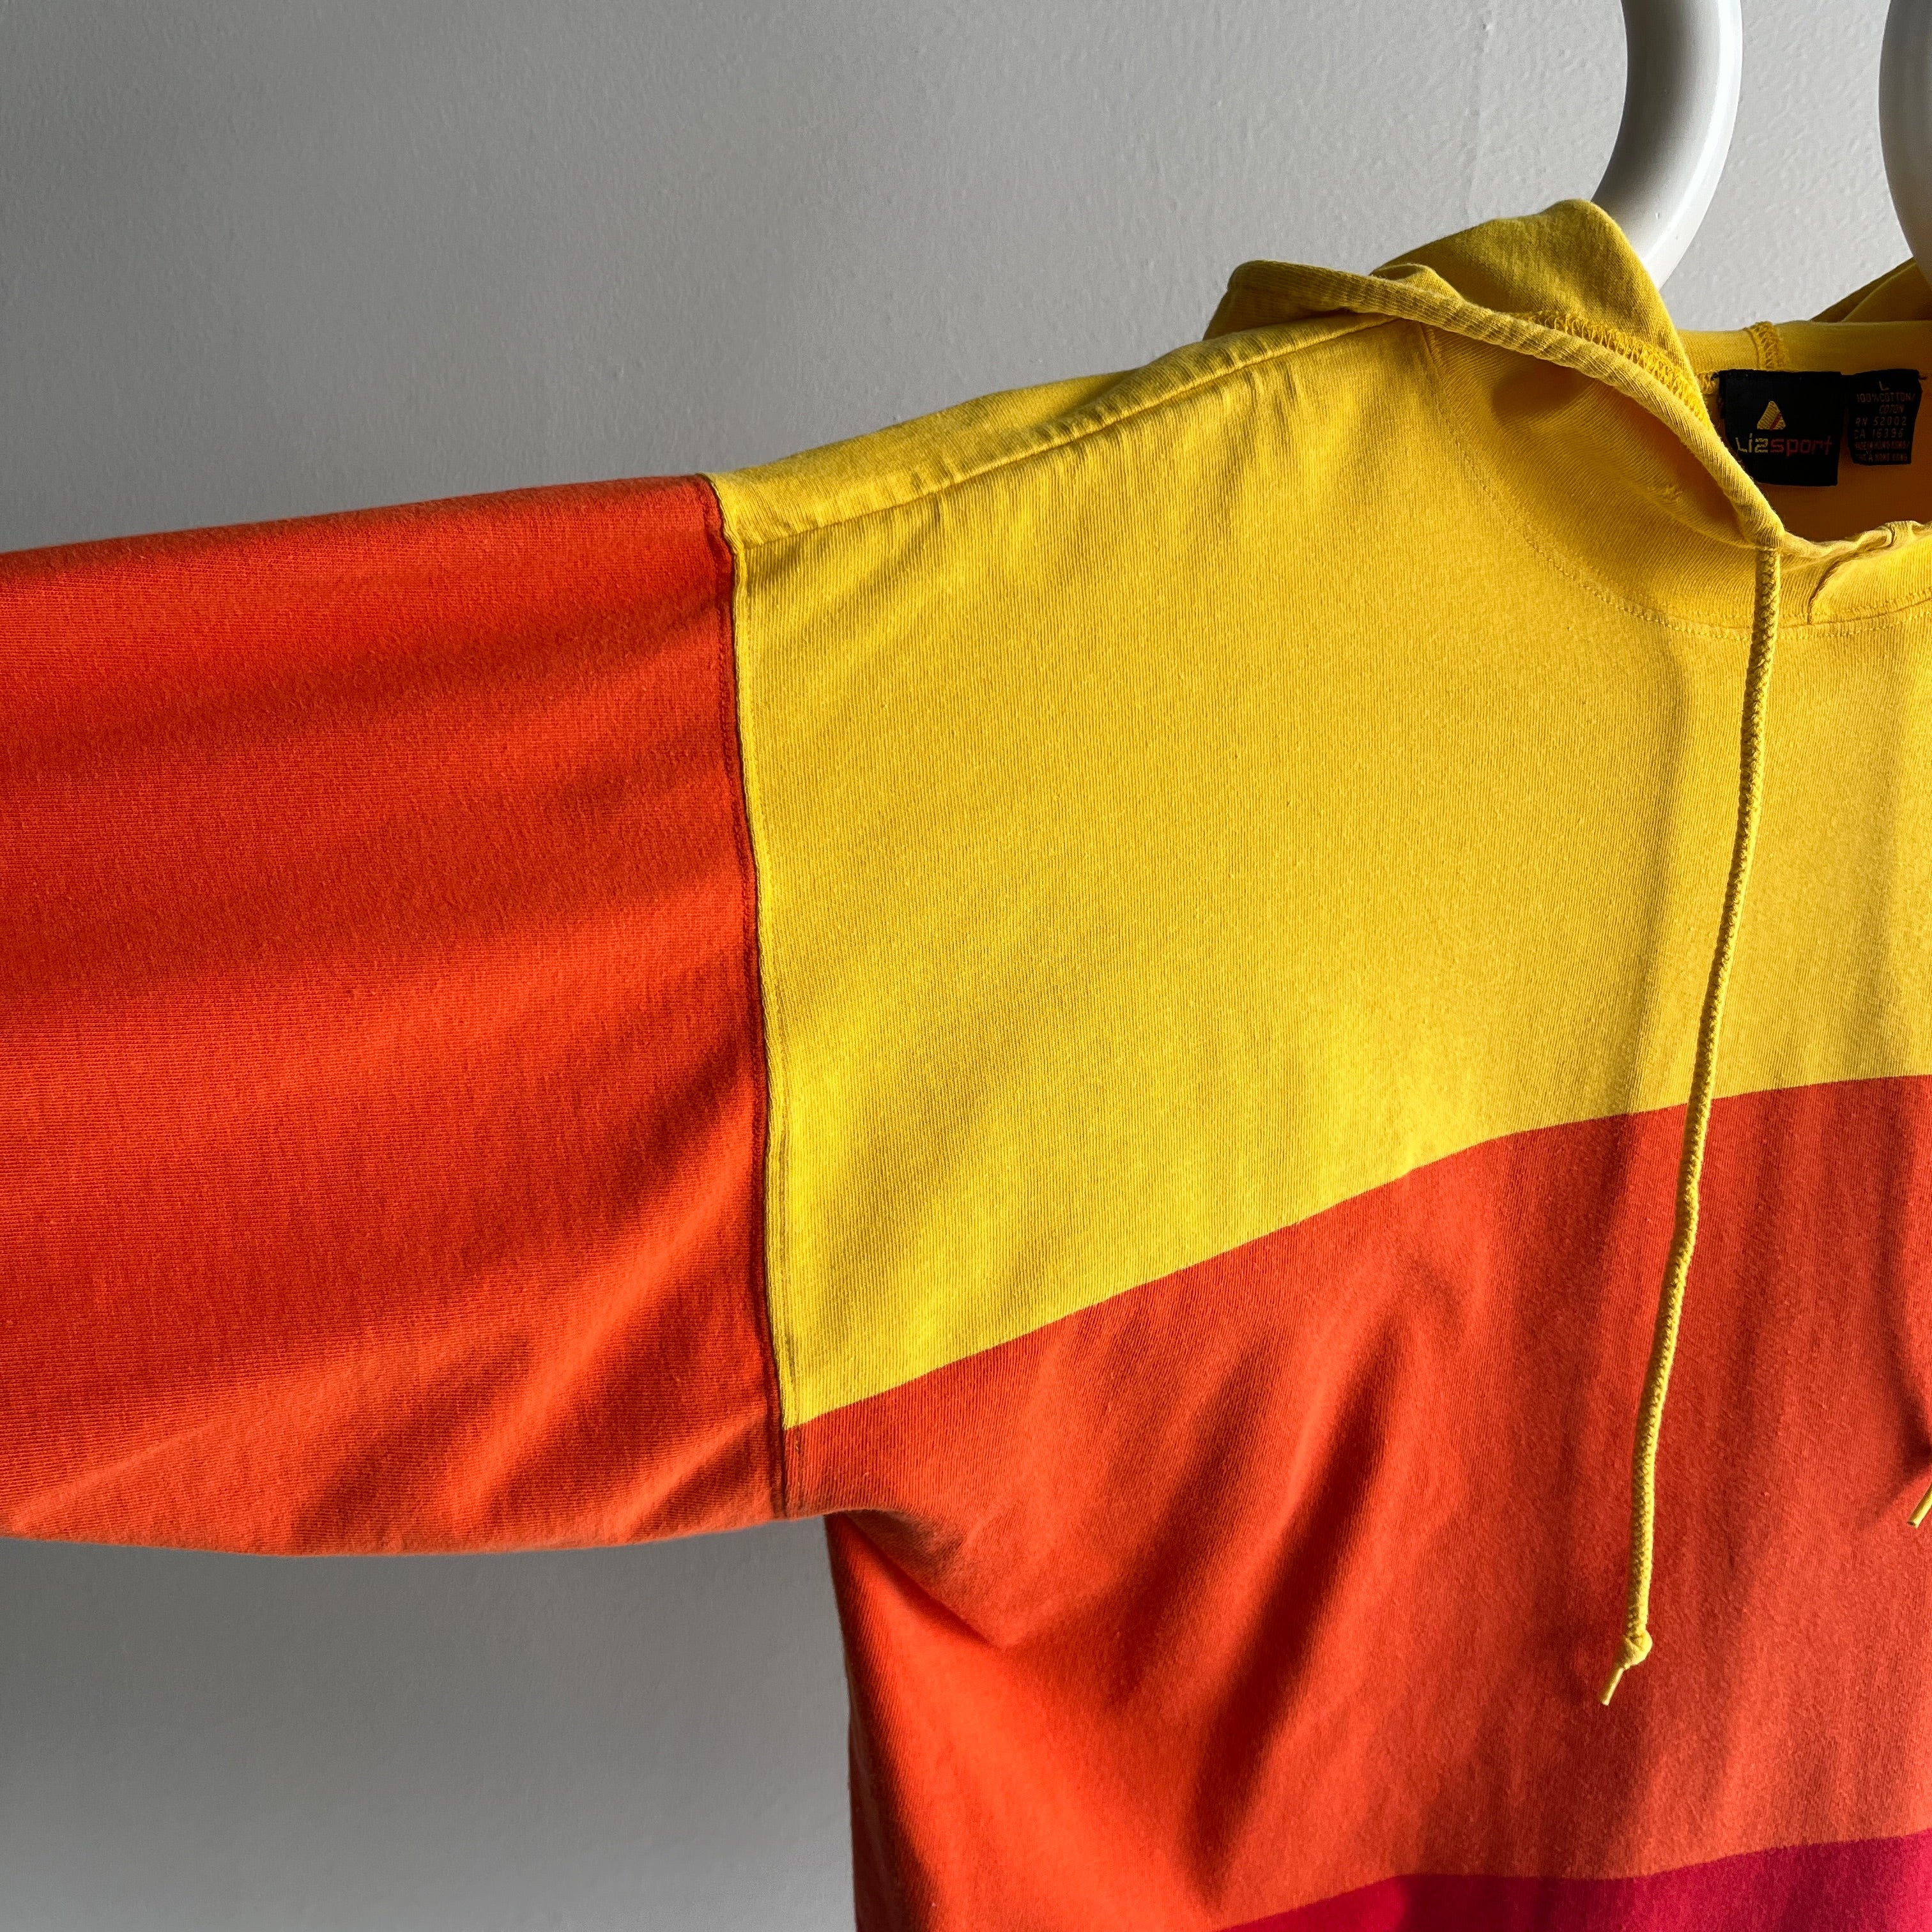 1980s Liz Claiborne - Liz Sport - Long Sleeve T-Shirt Hoodie - So GOOD!!!!